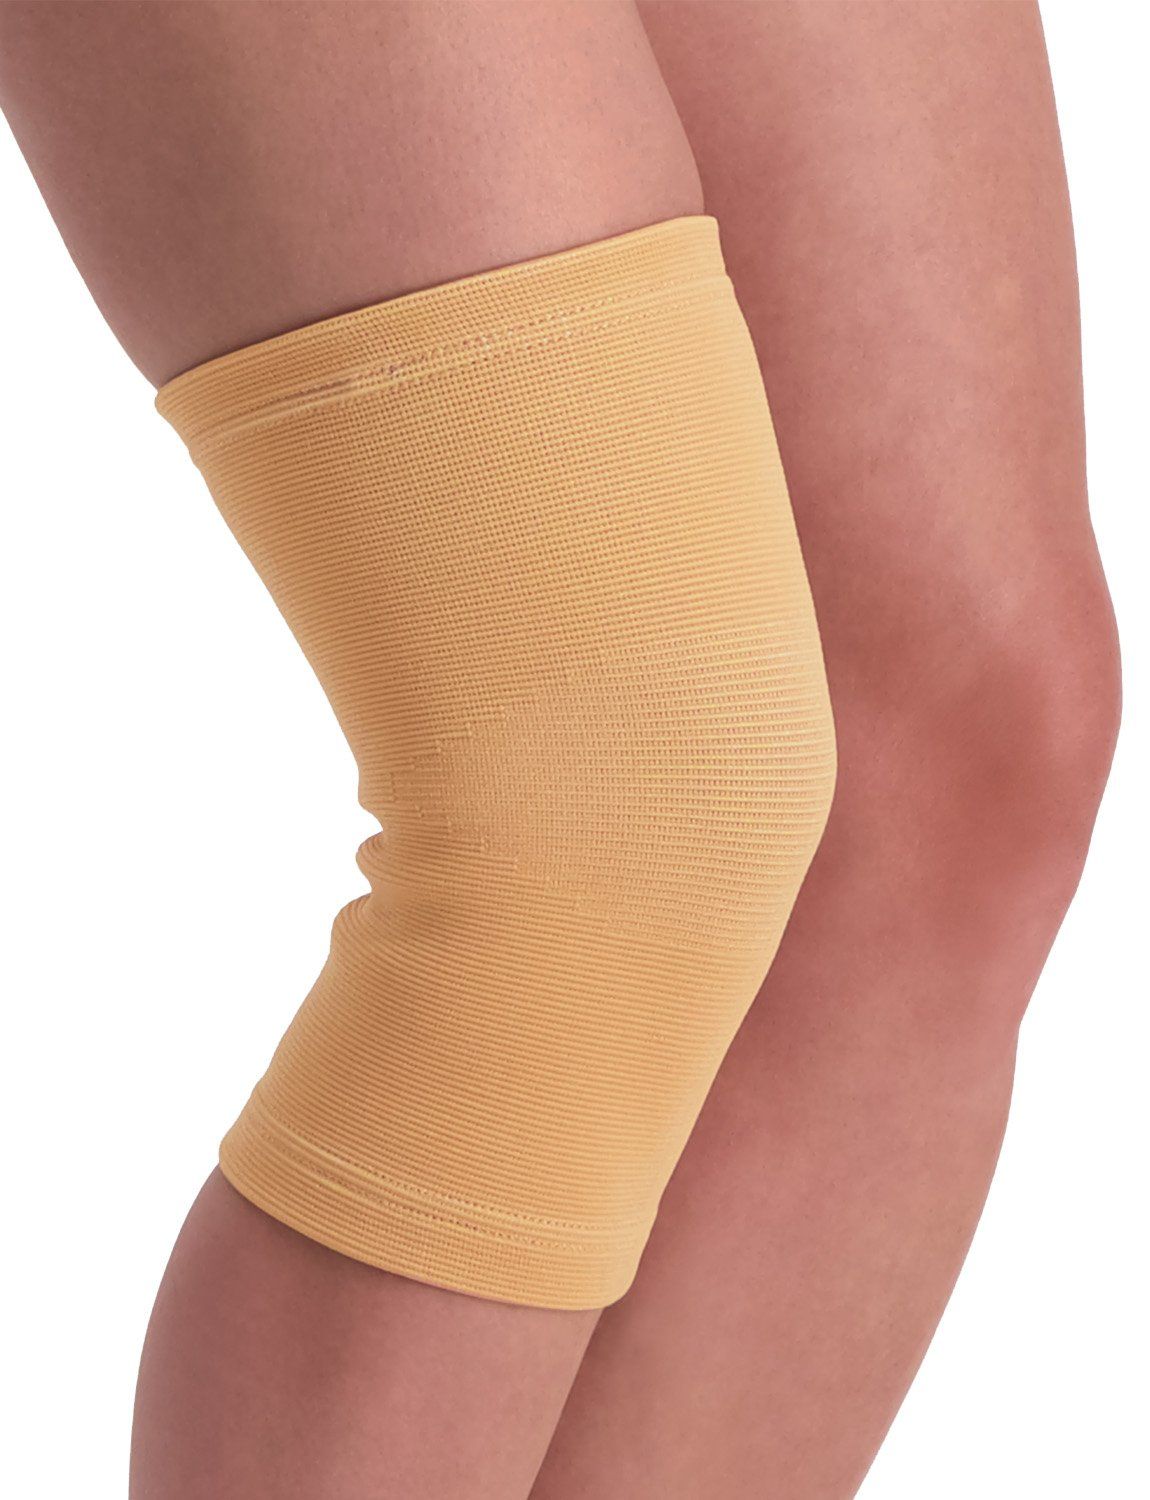 Dunimed knee sleeve for sale